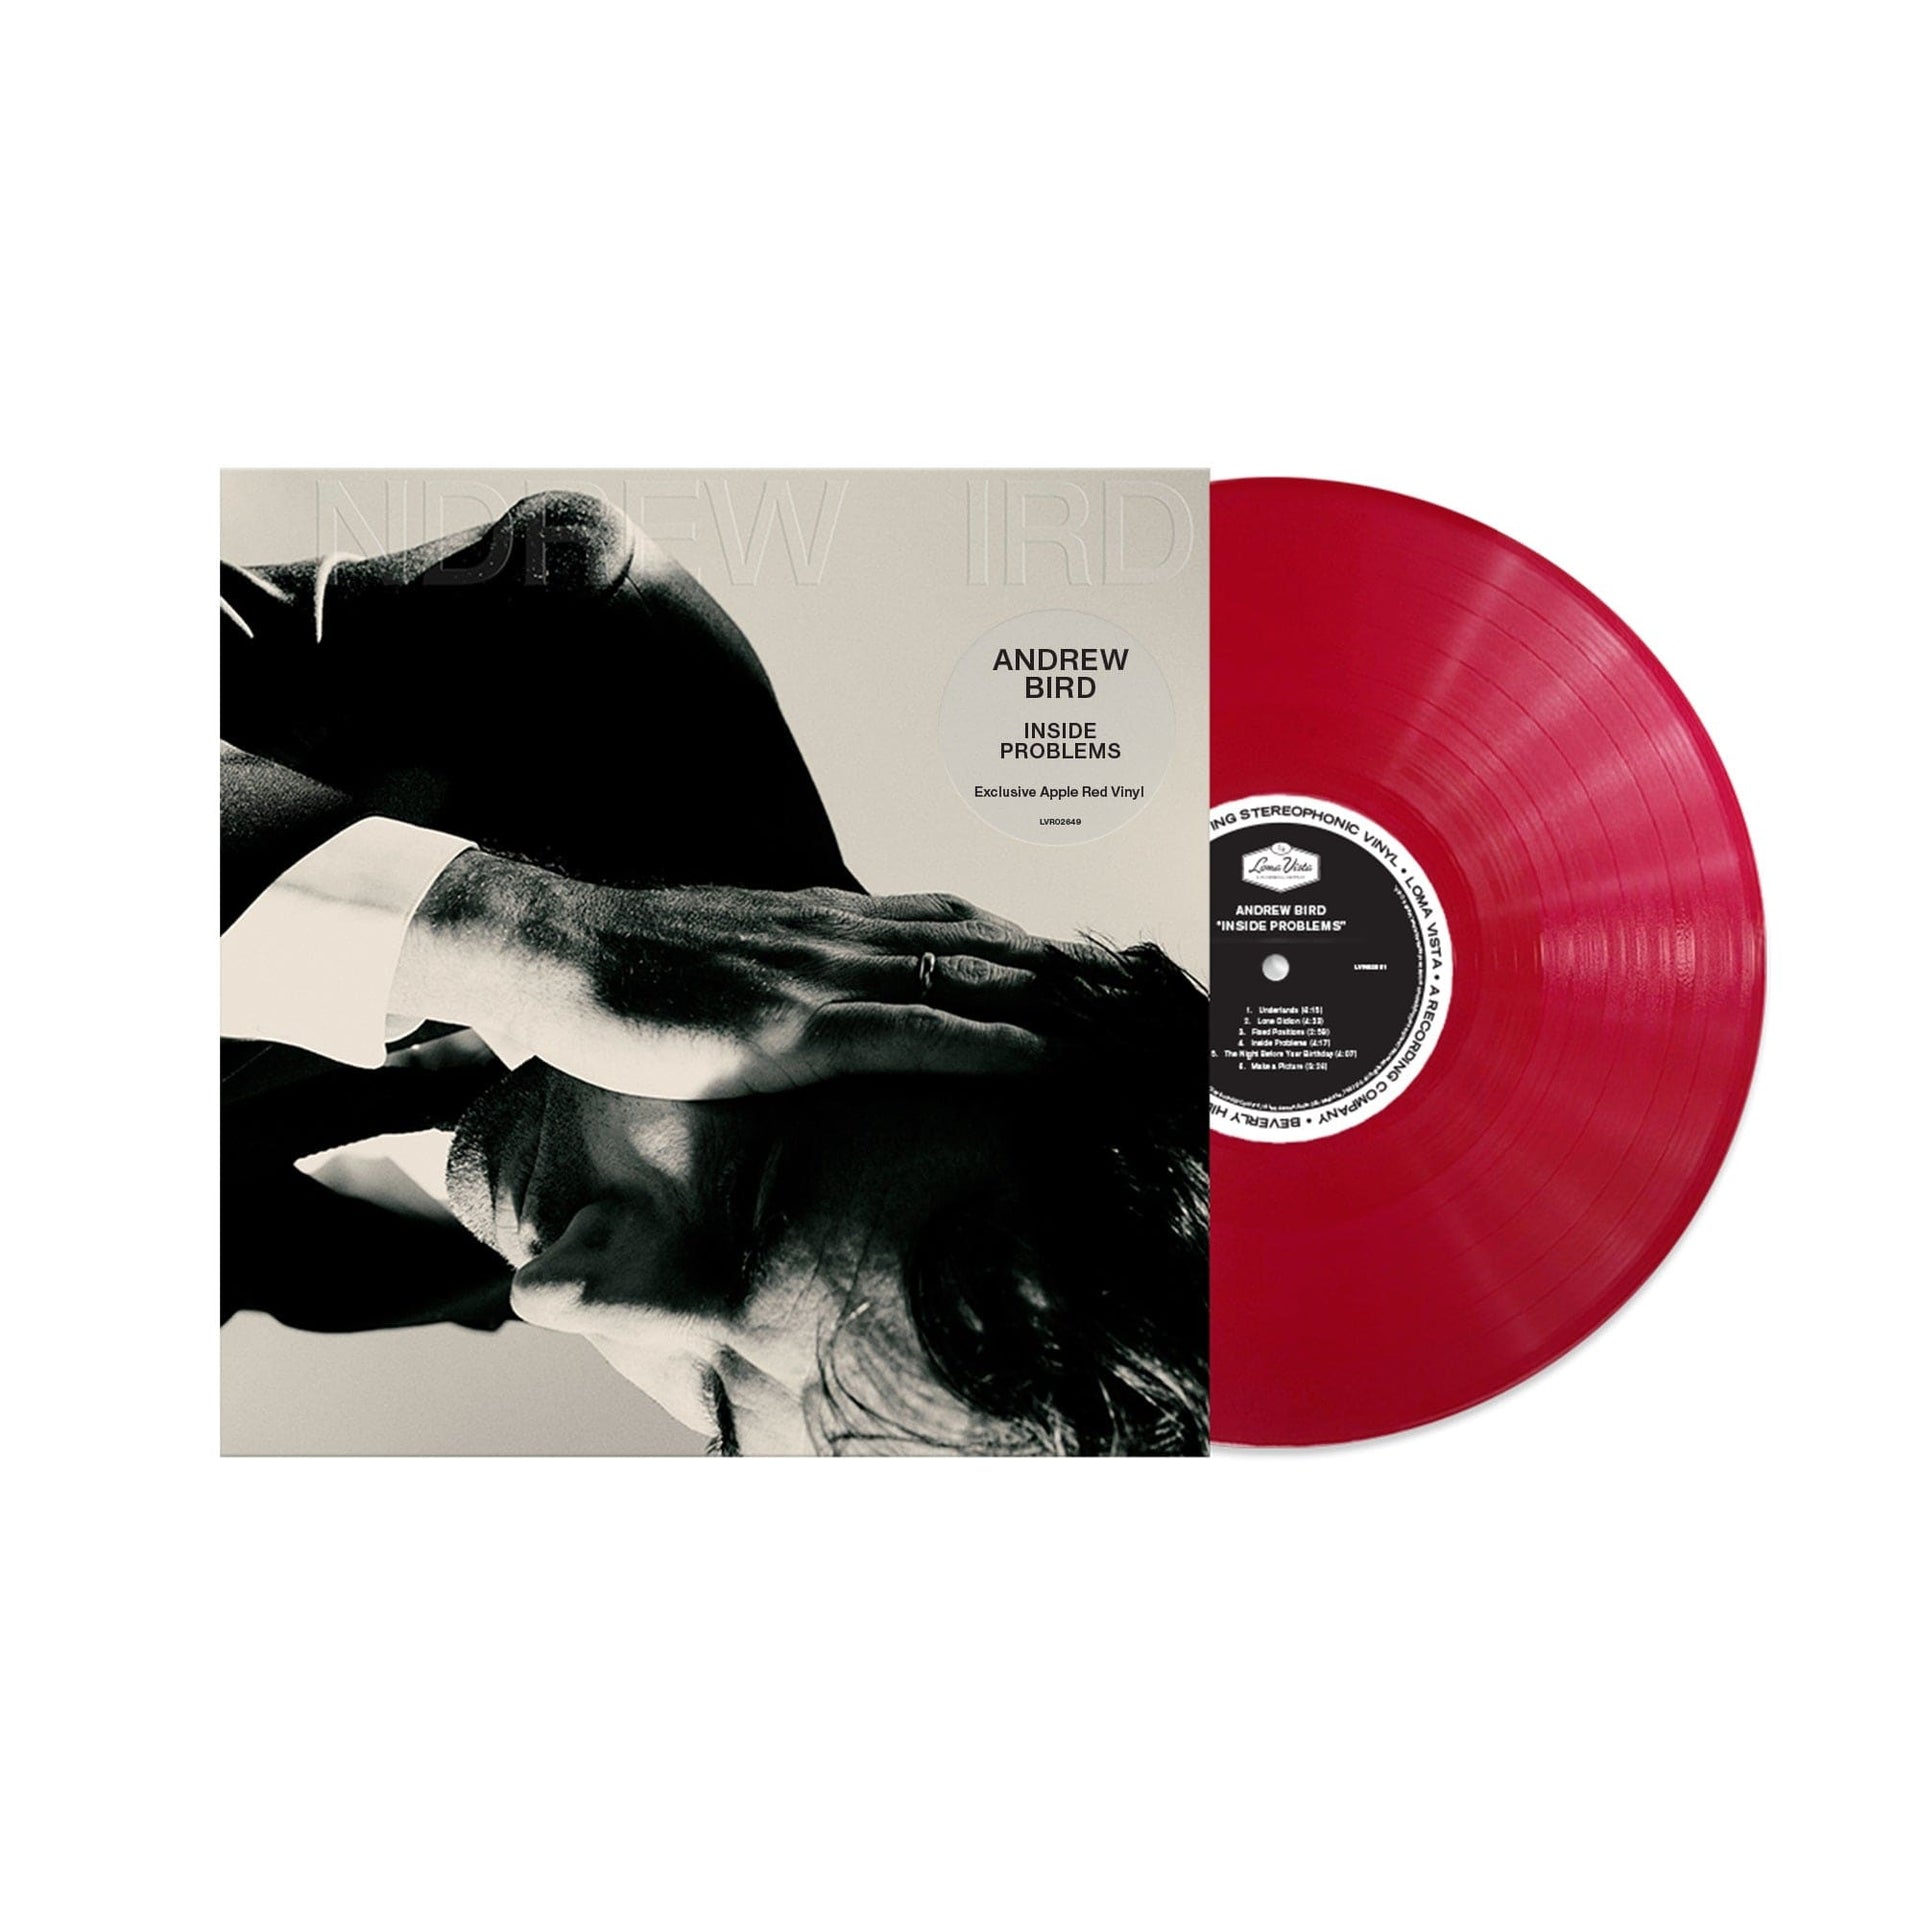 Andrew Bird: Inside Problems Vinyl LP (Indie Exclusive RED)